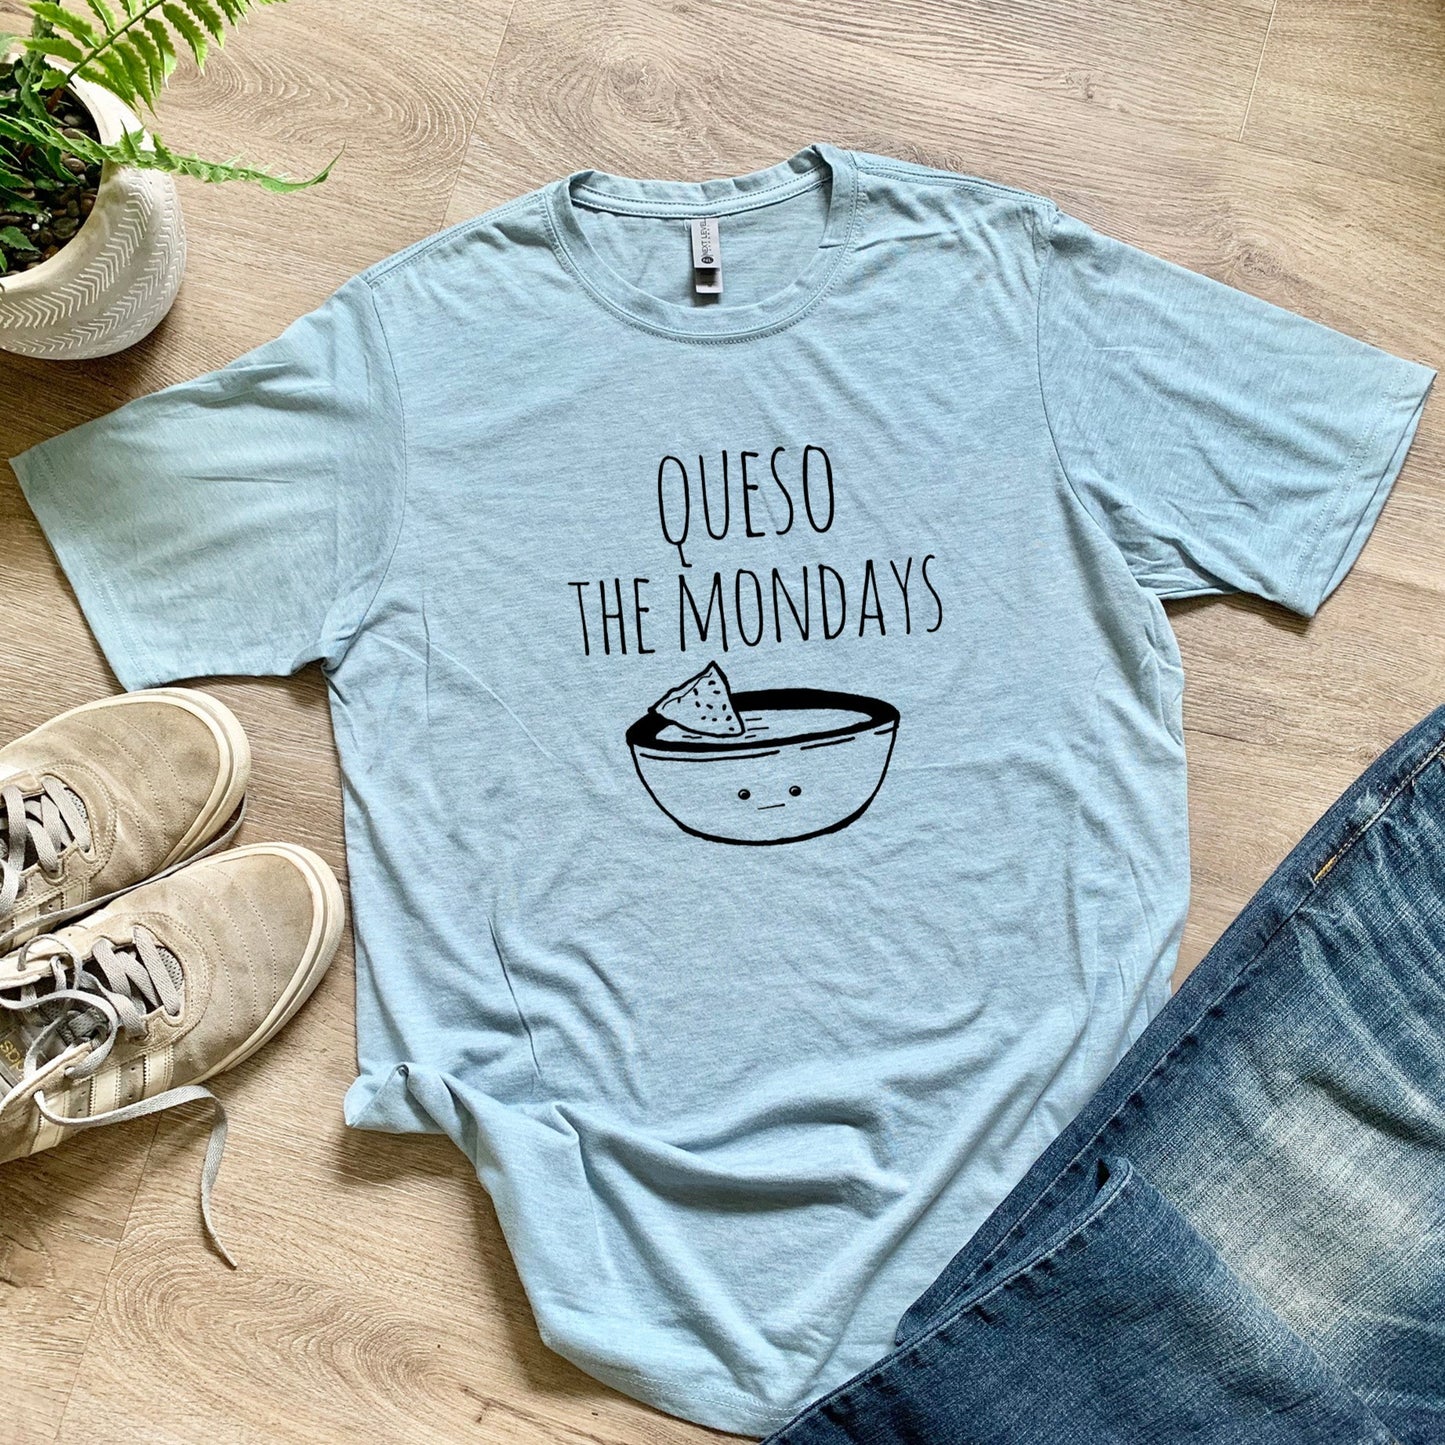 Queso The Mondays (Tacos) - Men's / Unisex Tee - Stonewash Blue or Sage